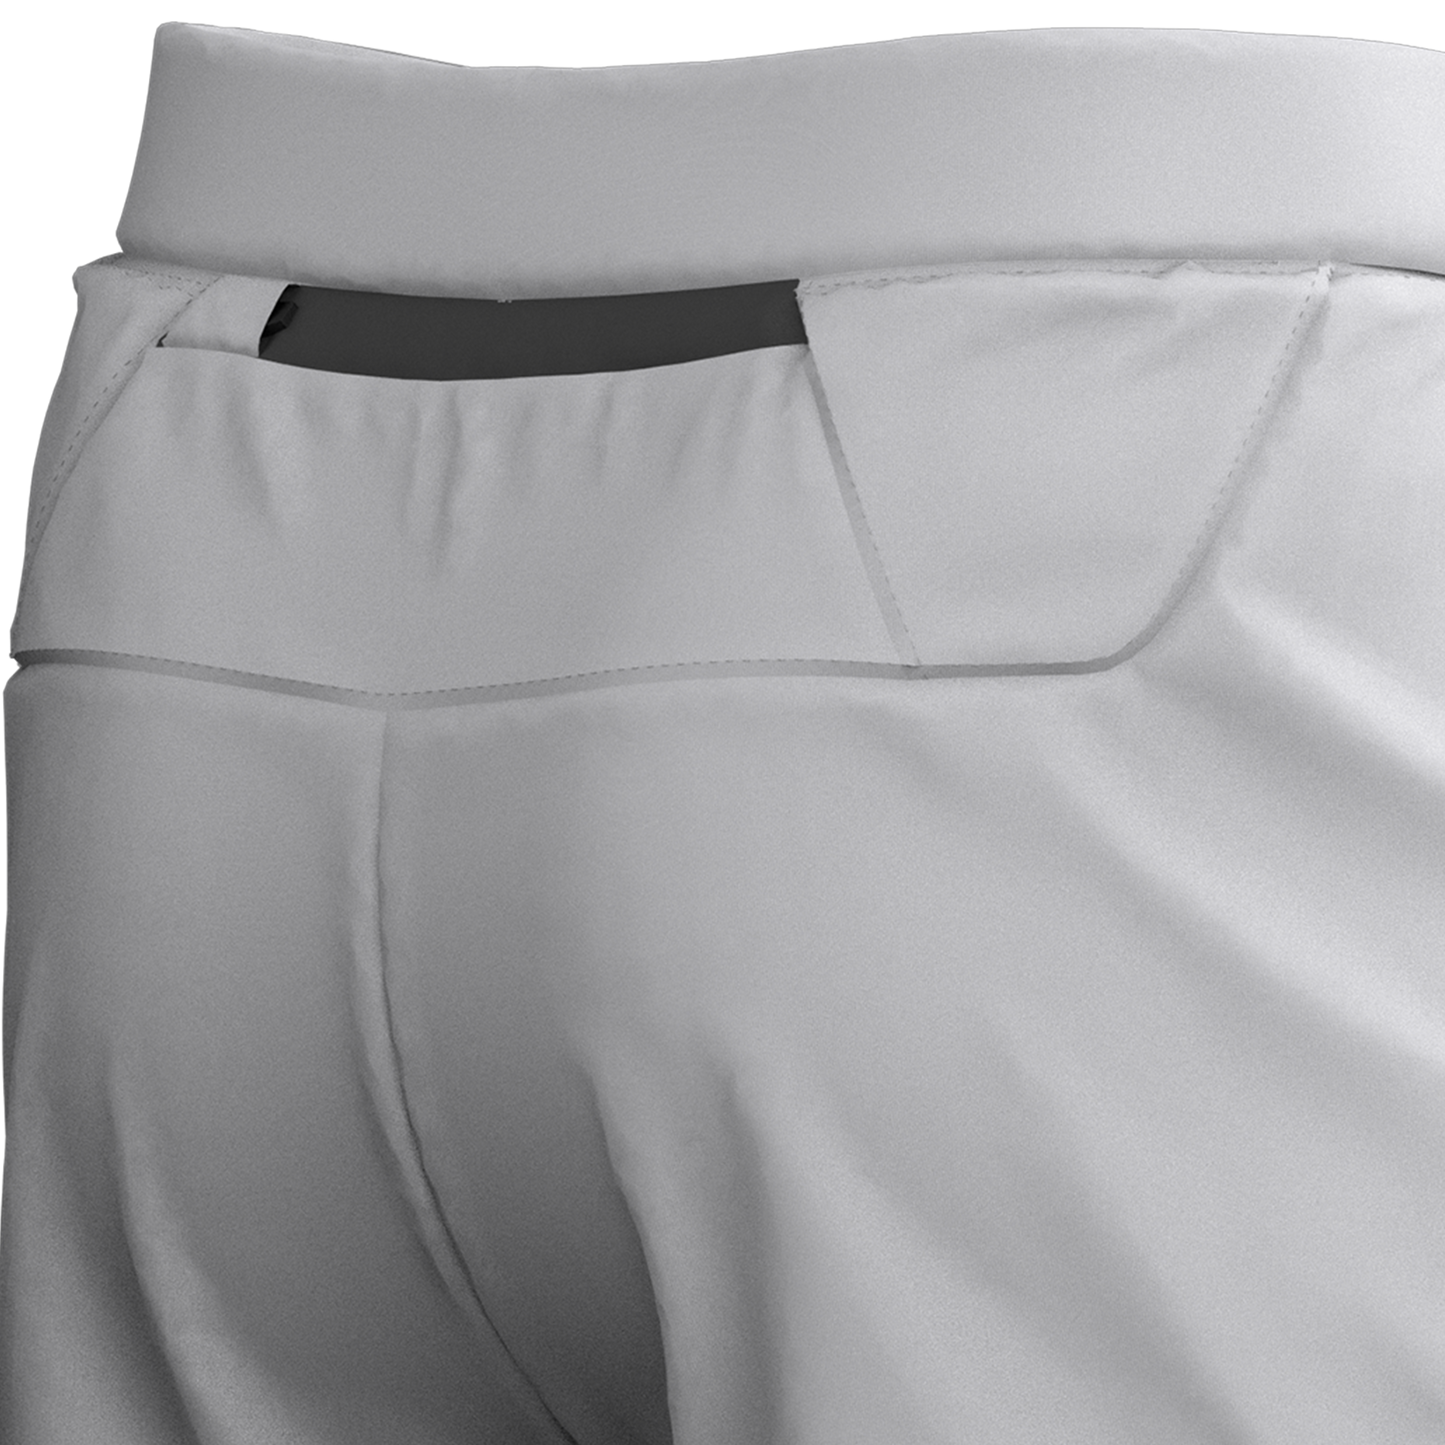 Men's Light Grey Long Sleeve T-Shirt, Sports Shorts & Socks Set